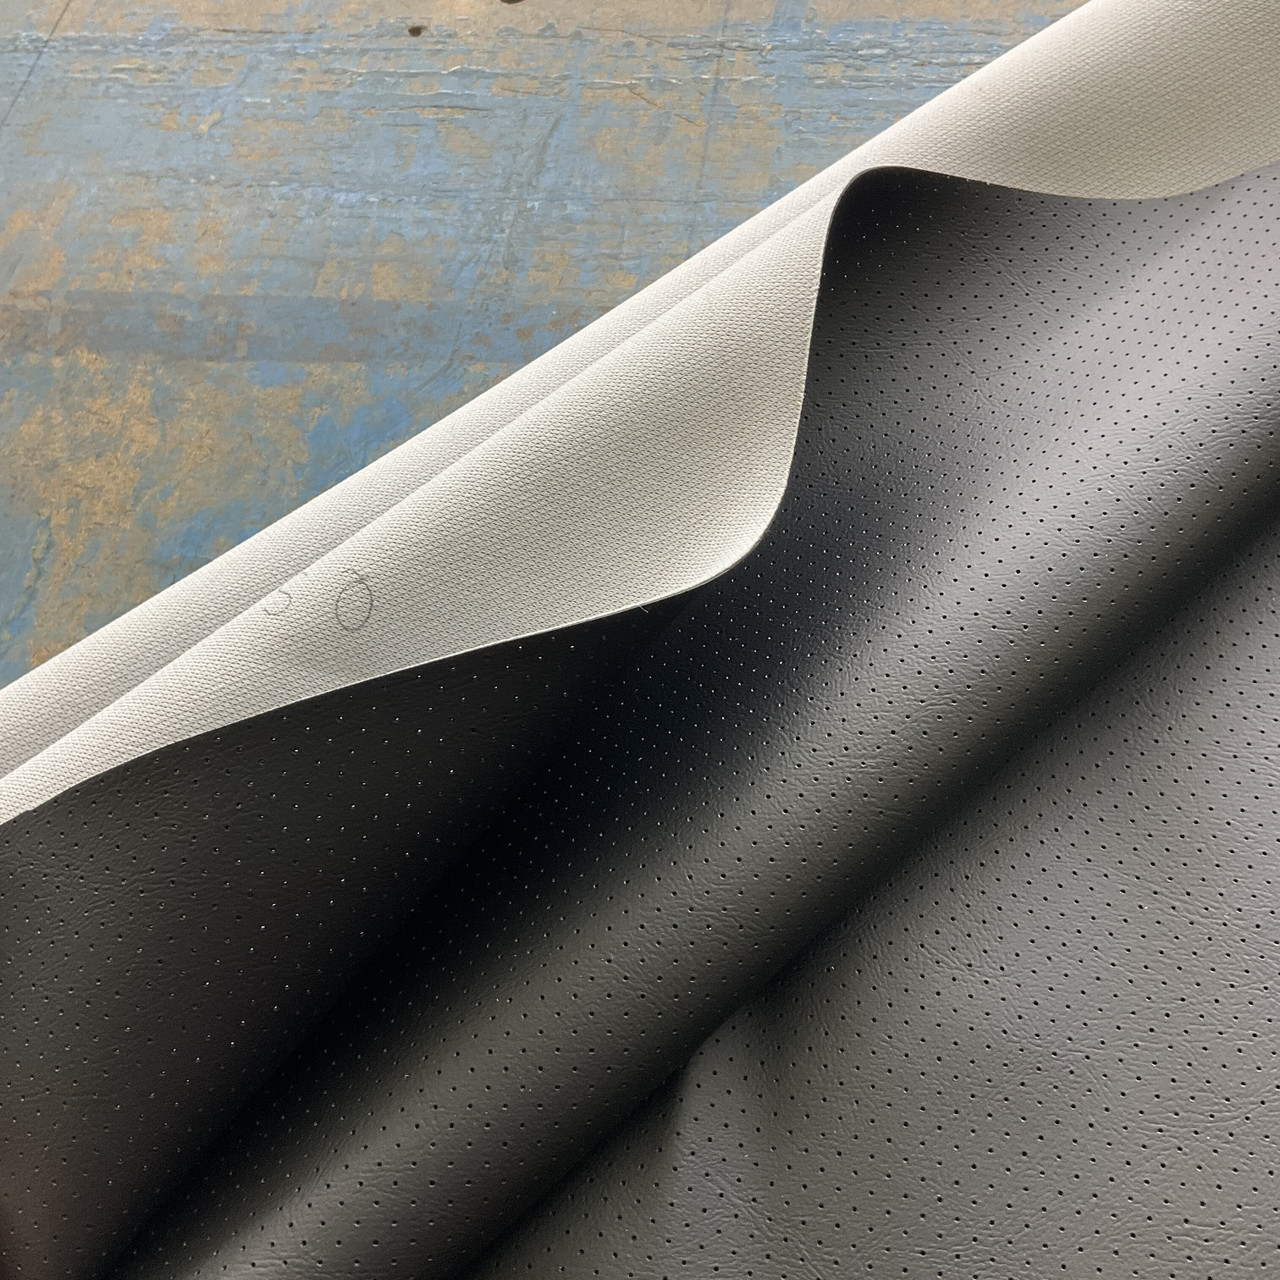 Bonded-Fabric Blade, Explore Fabric Blade, Artarron Fabric Bonded